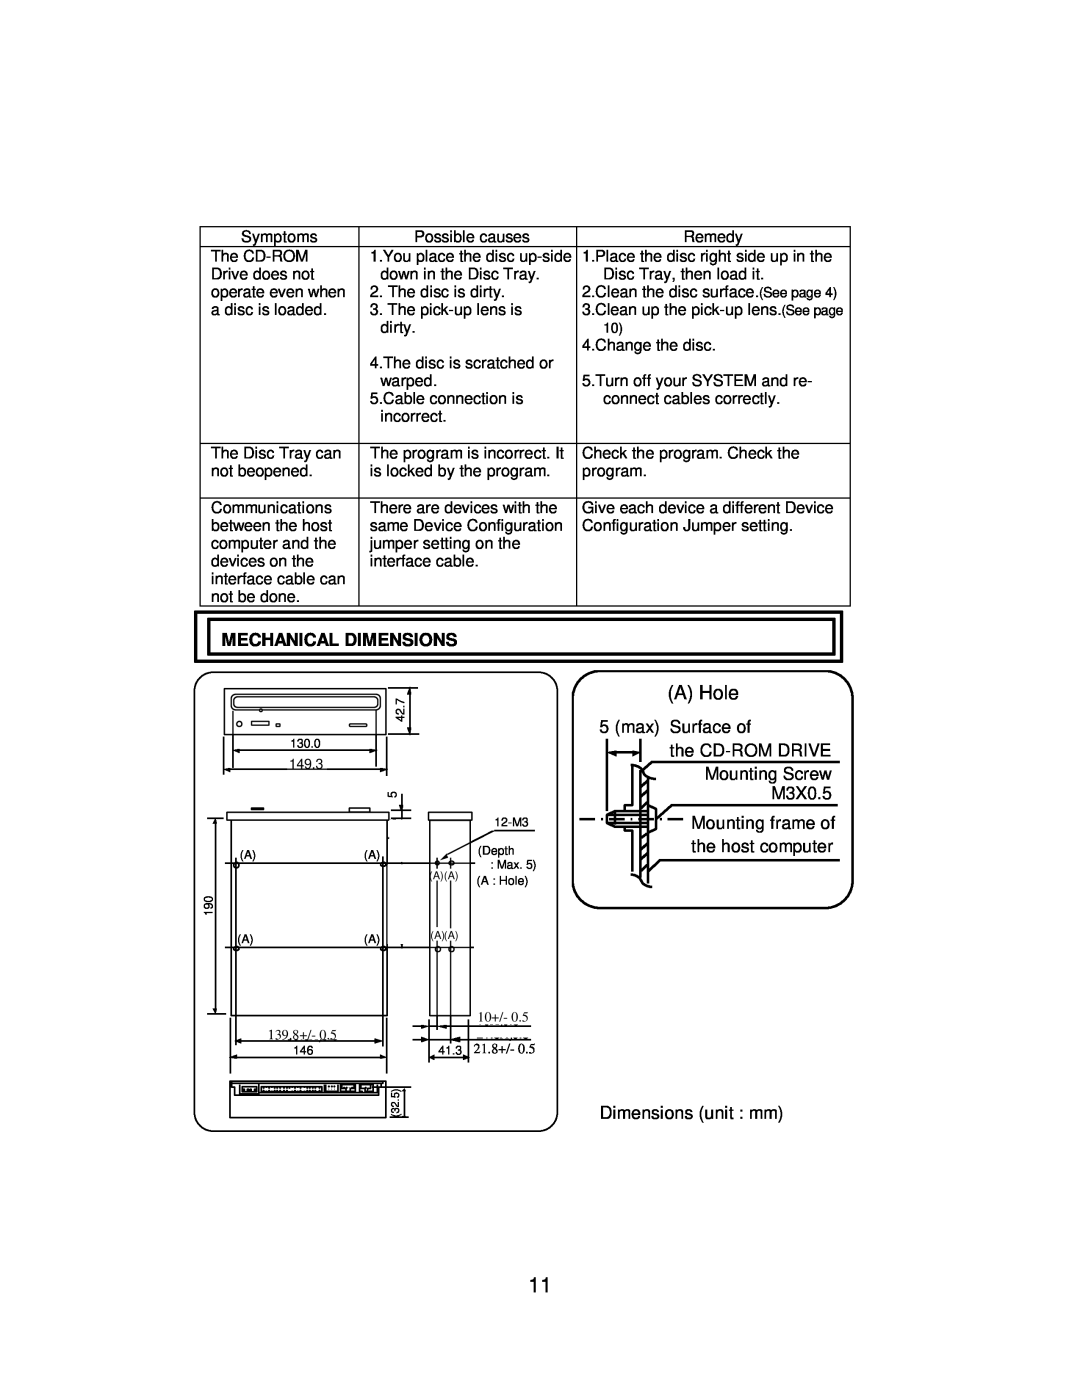 Hitachi CDR-8130 instruction manual A Hole, Mechanical Dimensions 